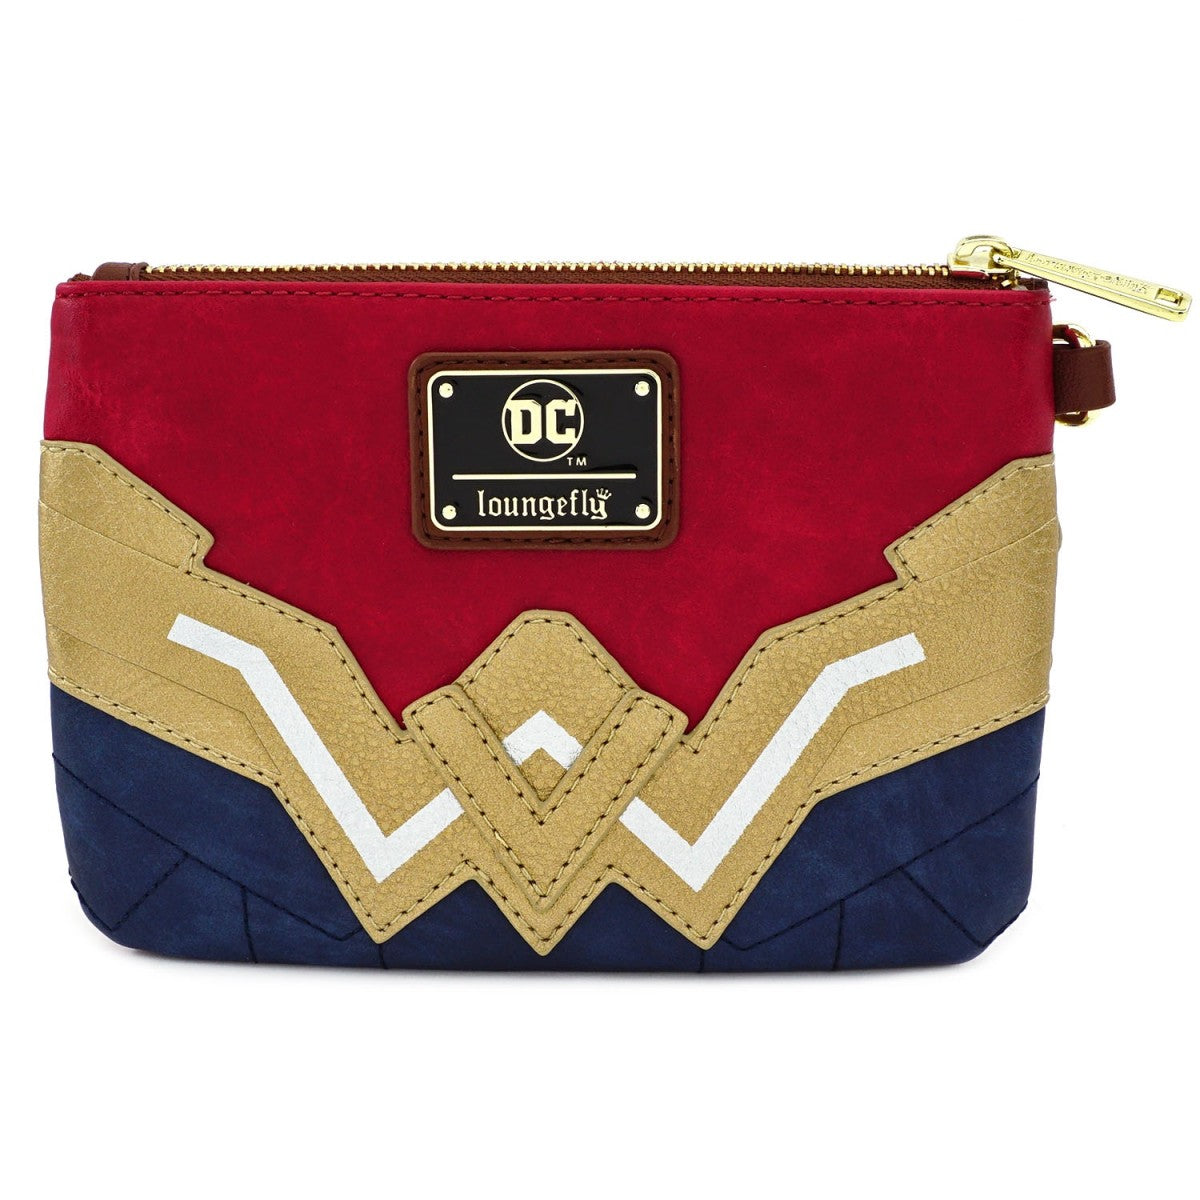 Loungefly X DC Comics Wonder Woman Cosplay Clutch Bag